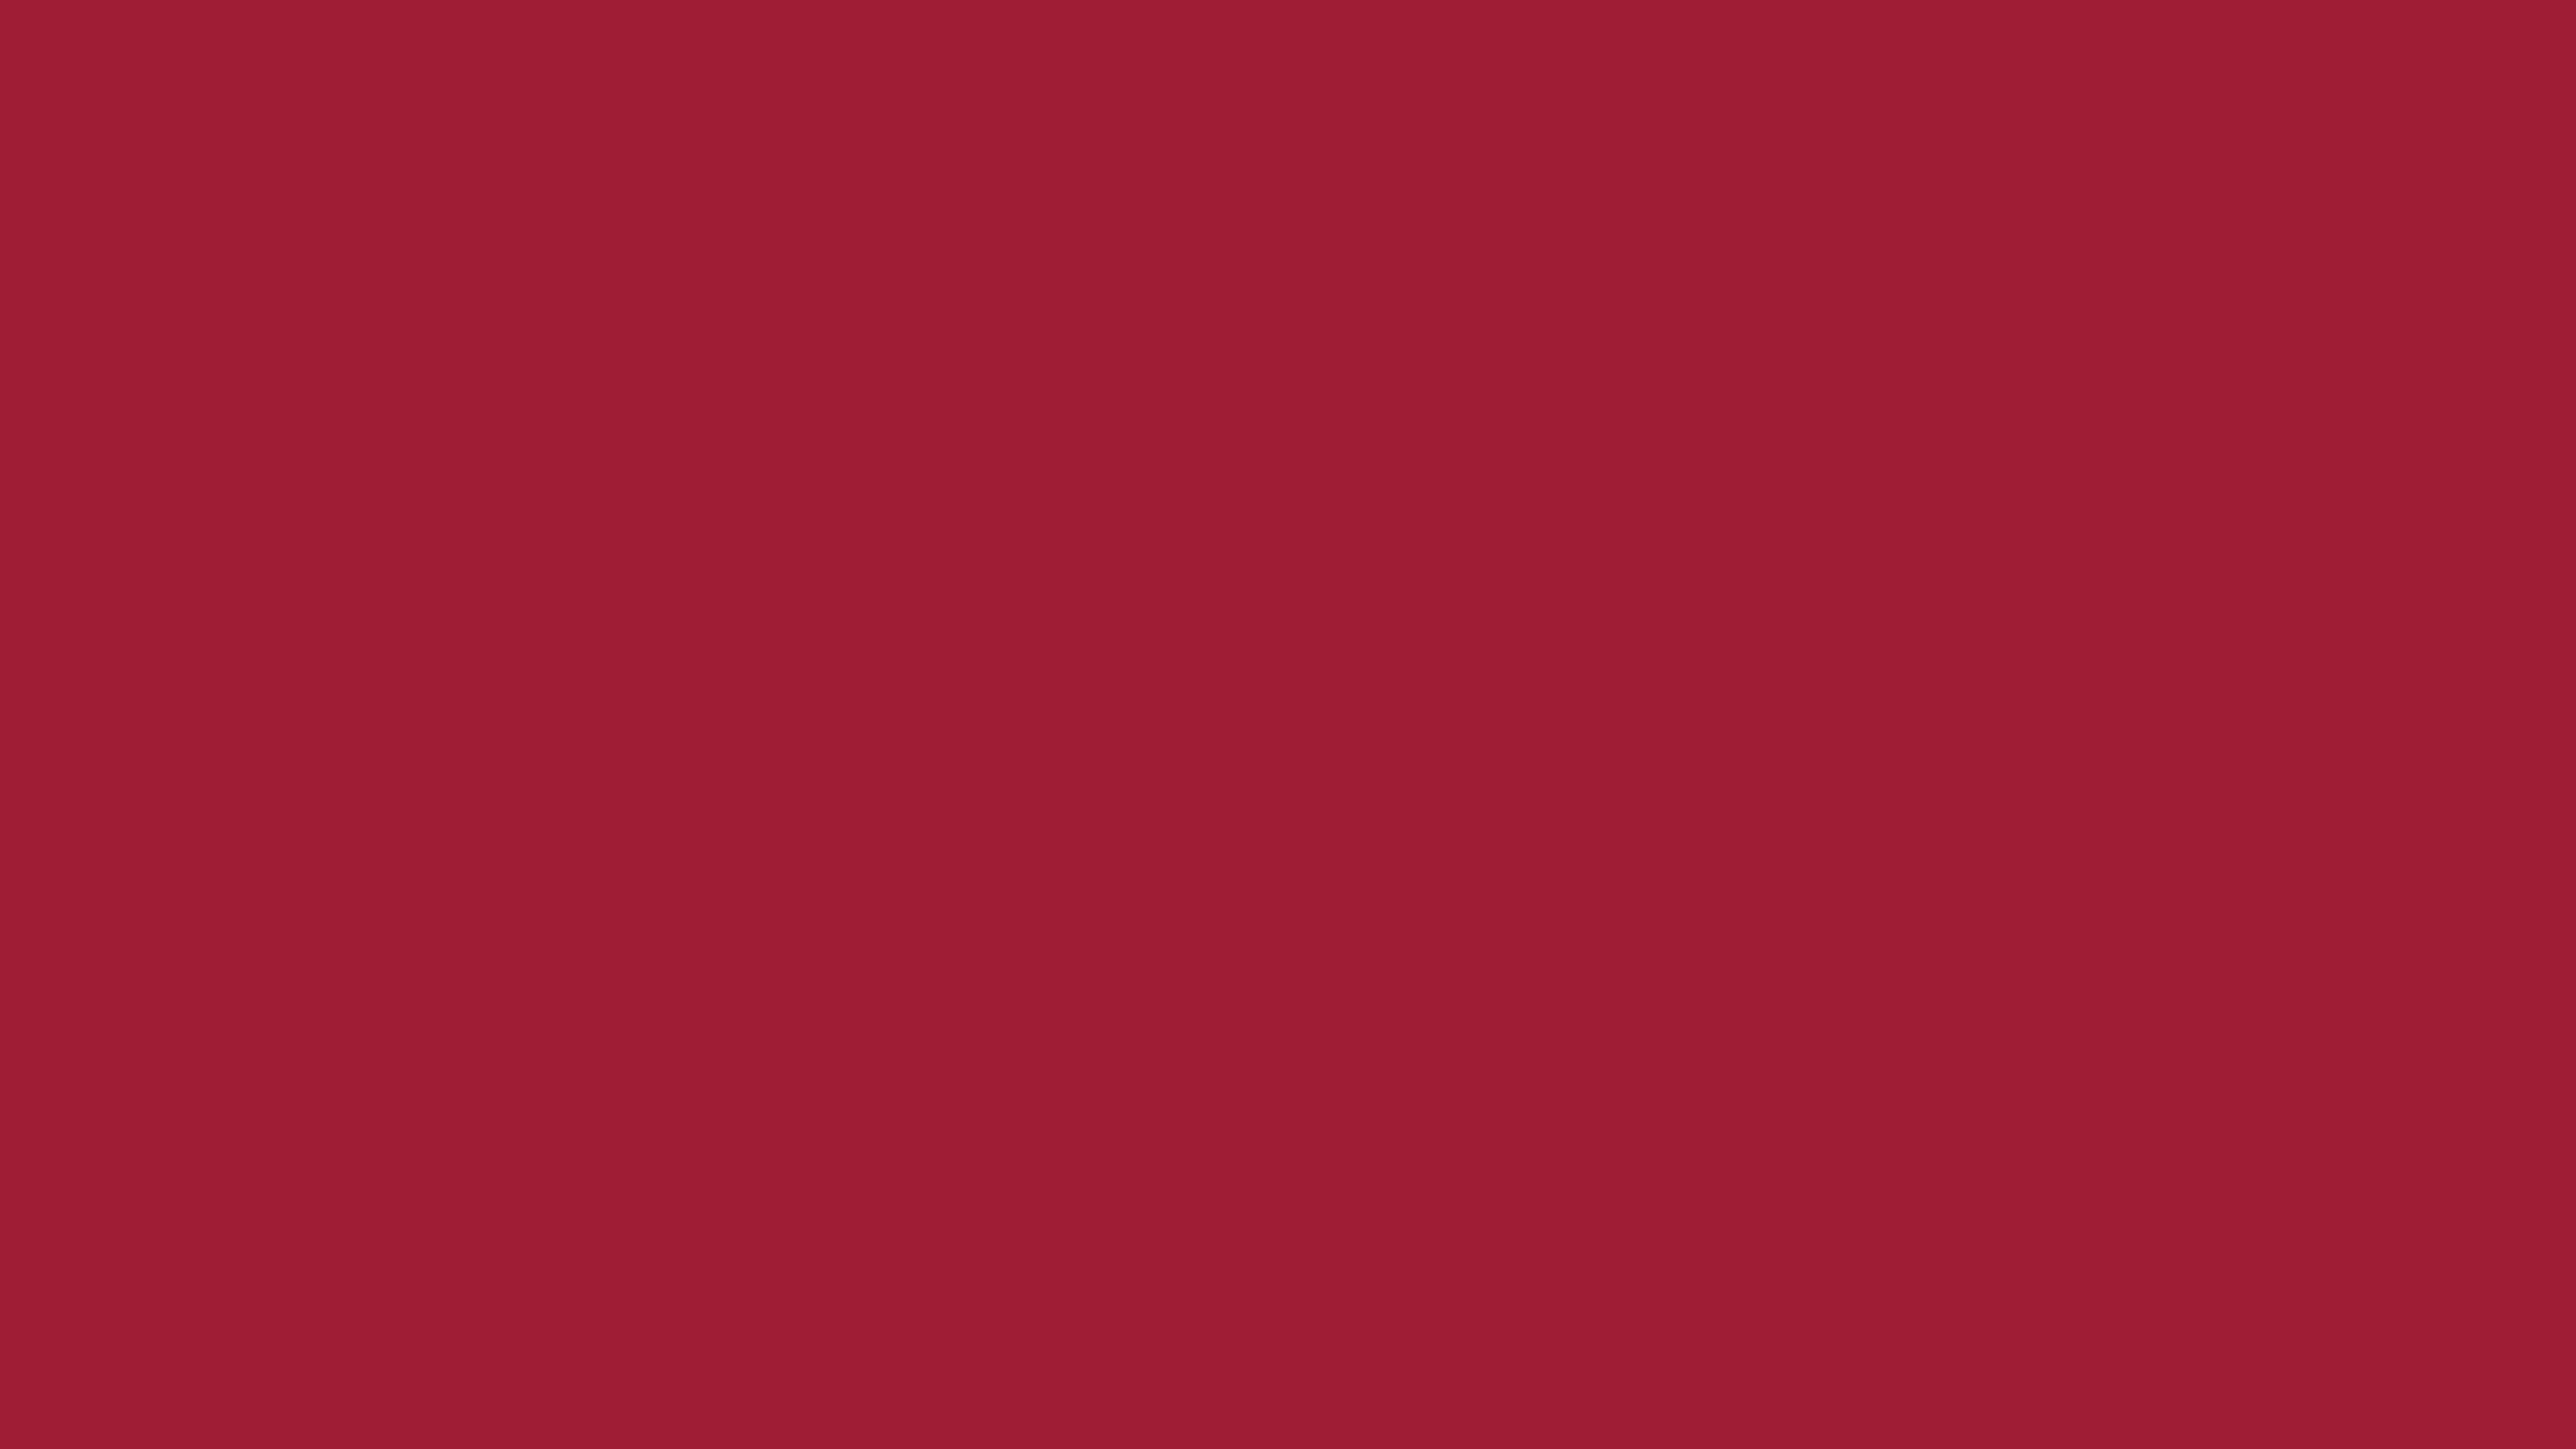 3840x2160 Vivid Burgundy Solid Color Background